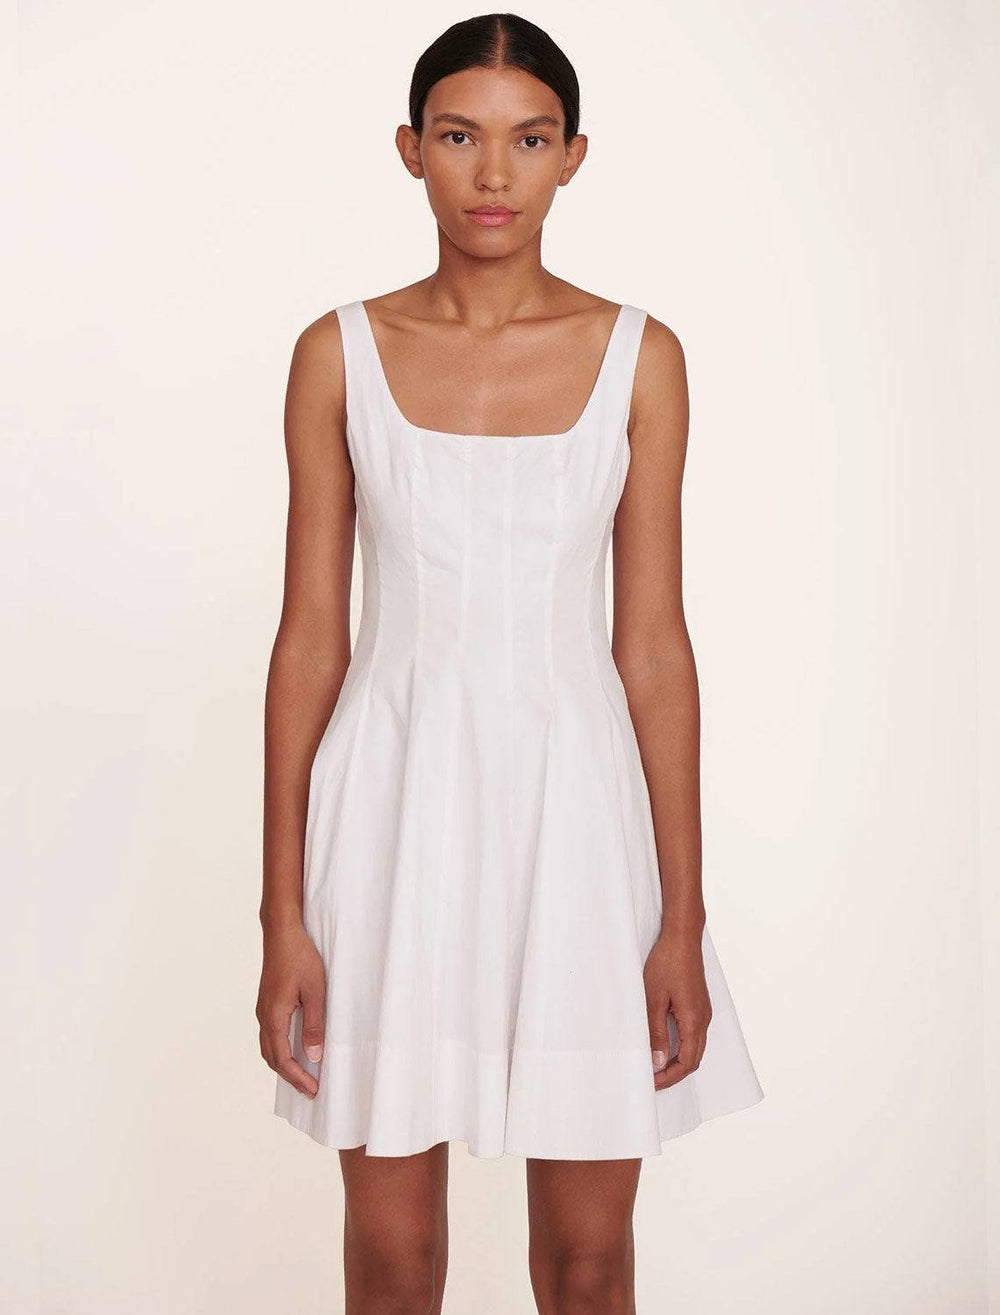 Model wearing STAUD's mini wells dress in white.